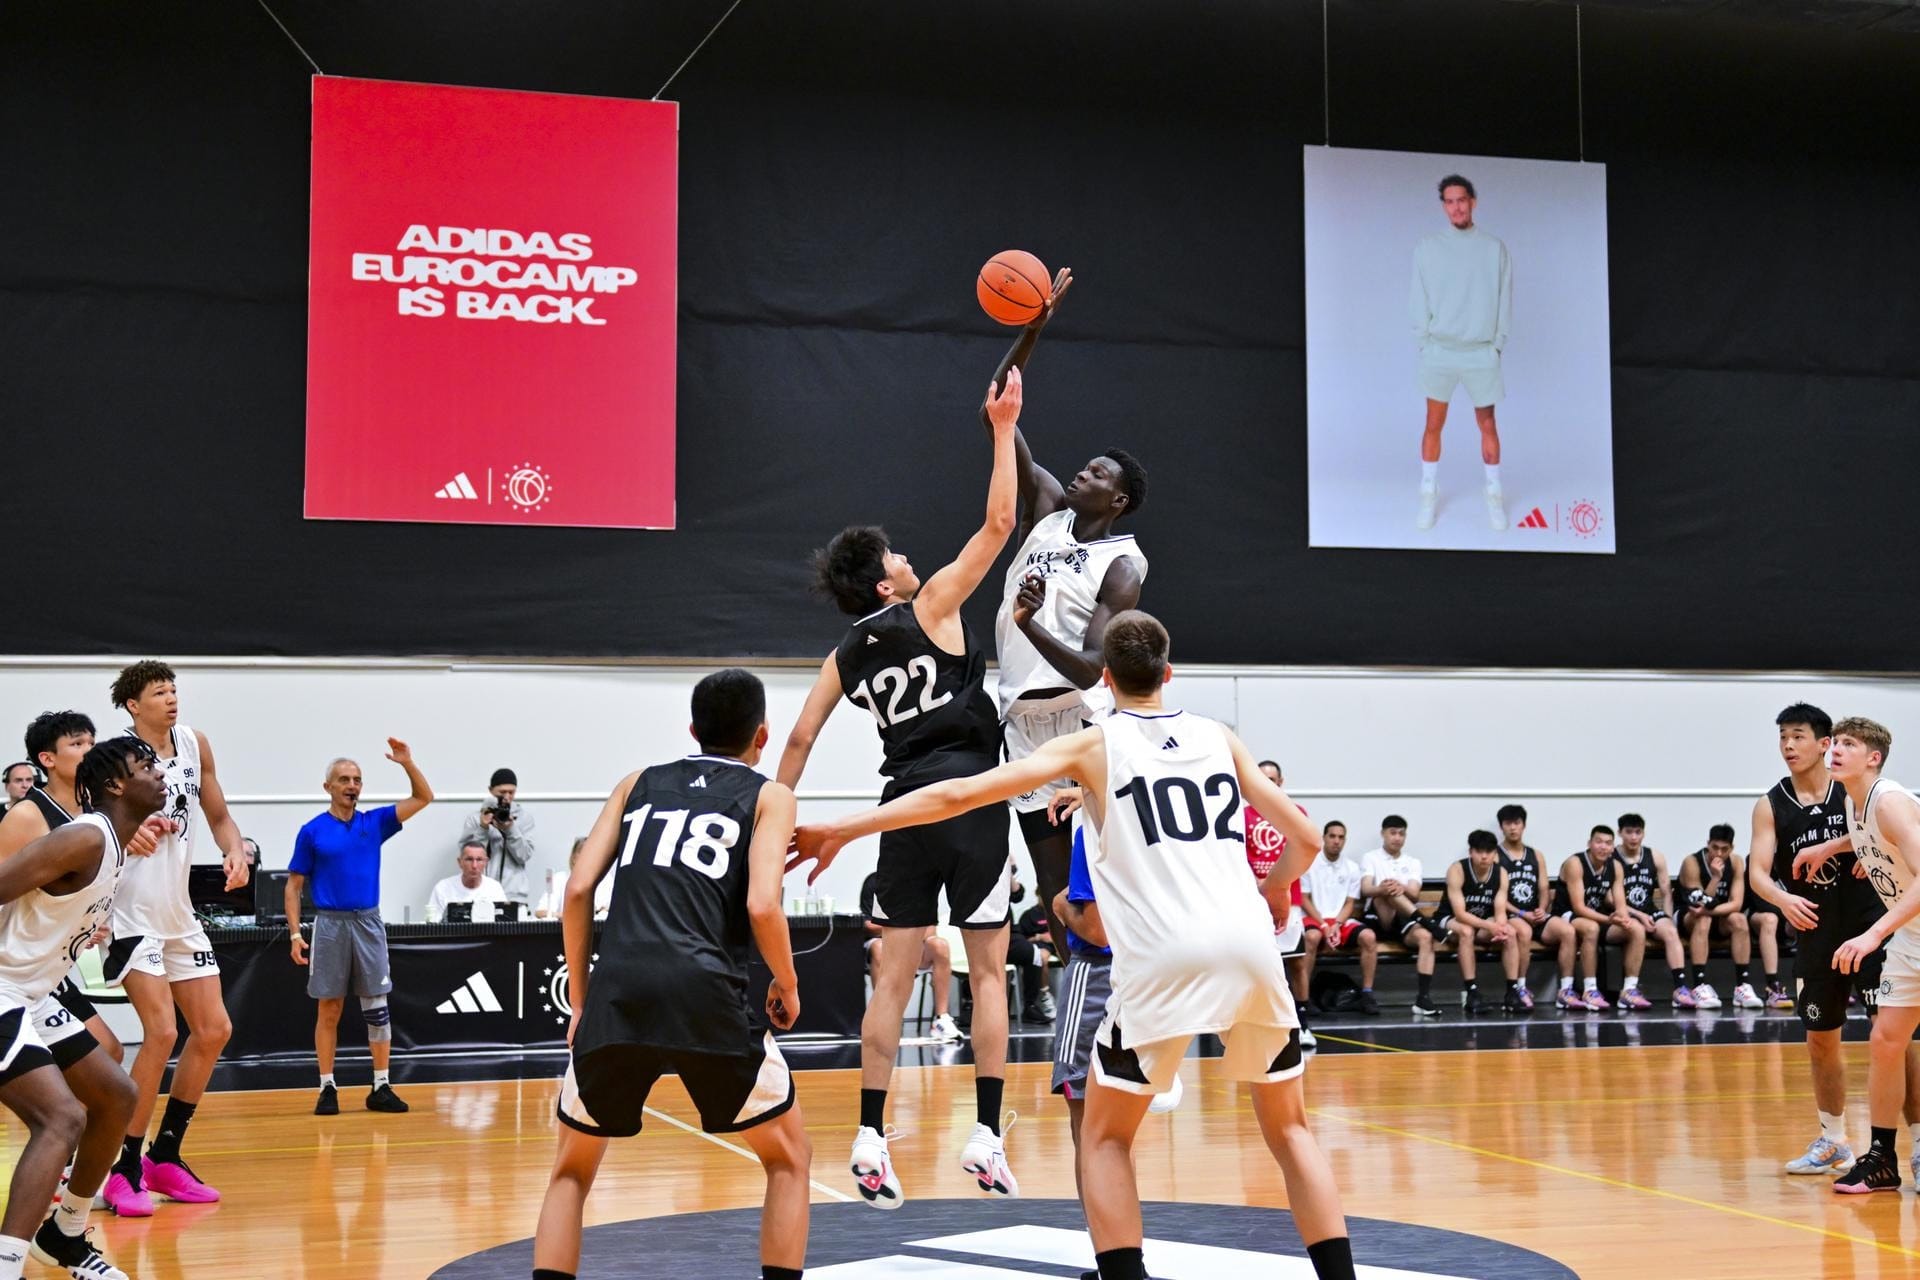 adidas Eurocamp highlights the NBA's next generation of world-class athletes